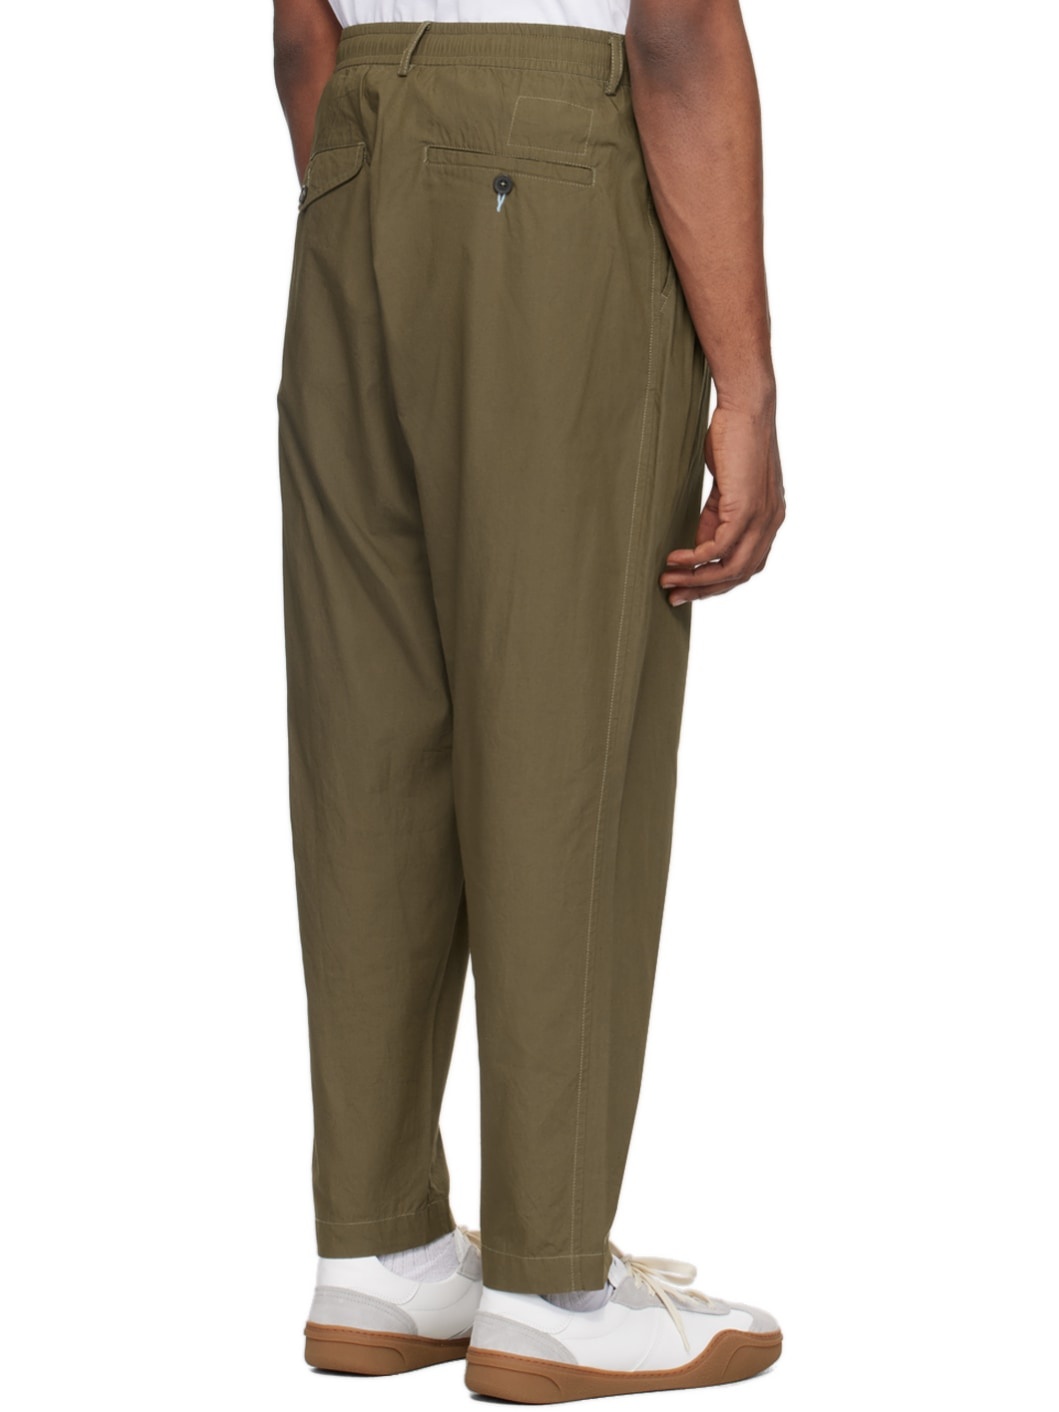 Khaki Pleated Trousers - 4